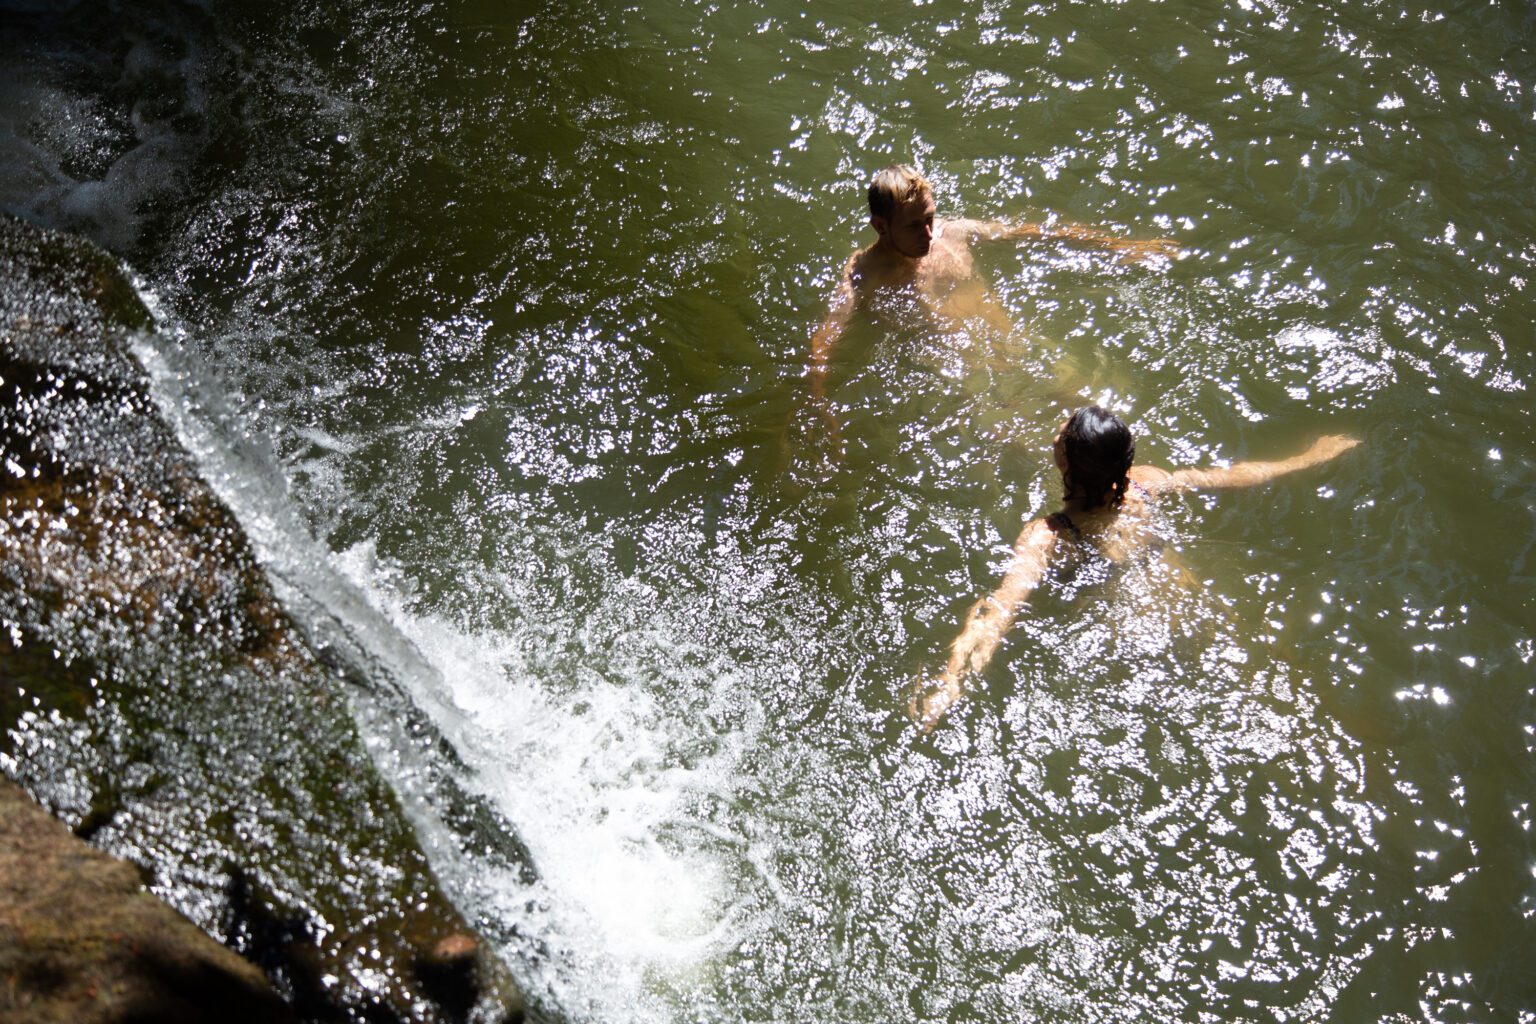 Michael Kretschmer and Emily Richter swim at Whatcom Falls Park on July 25.